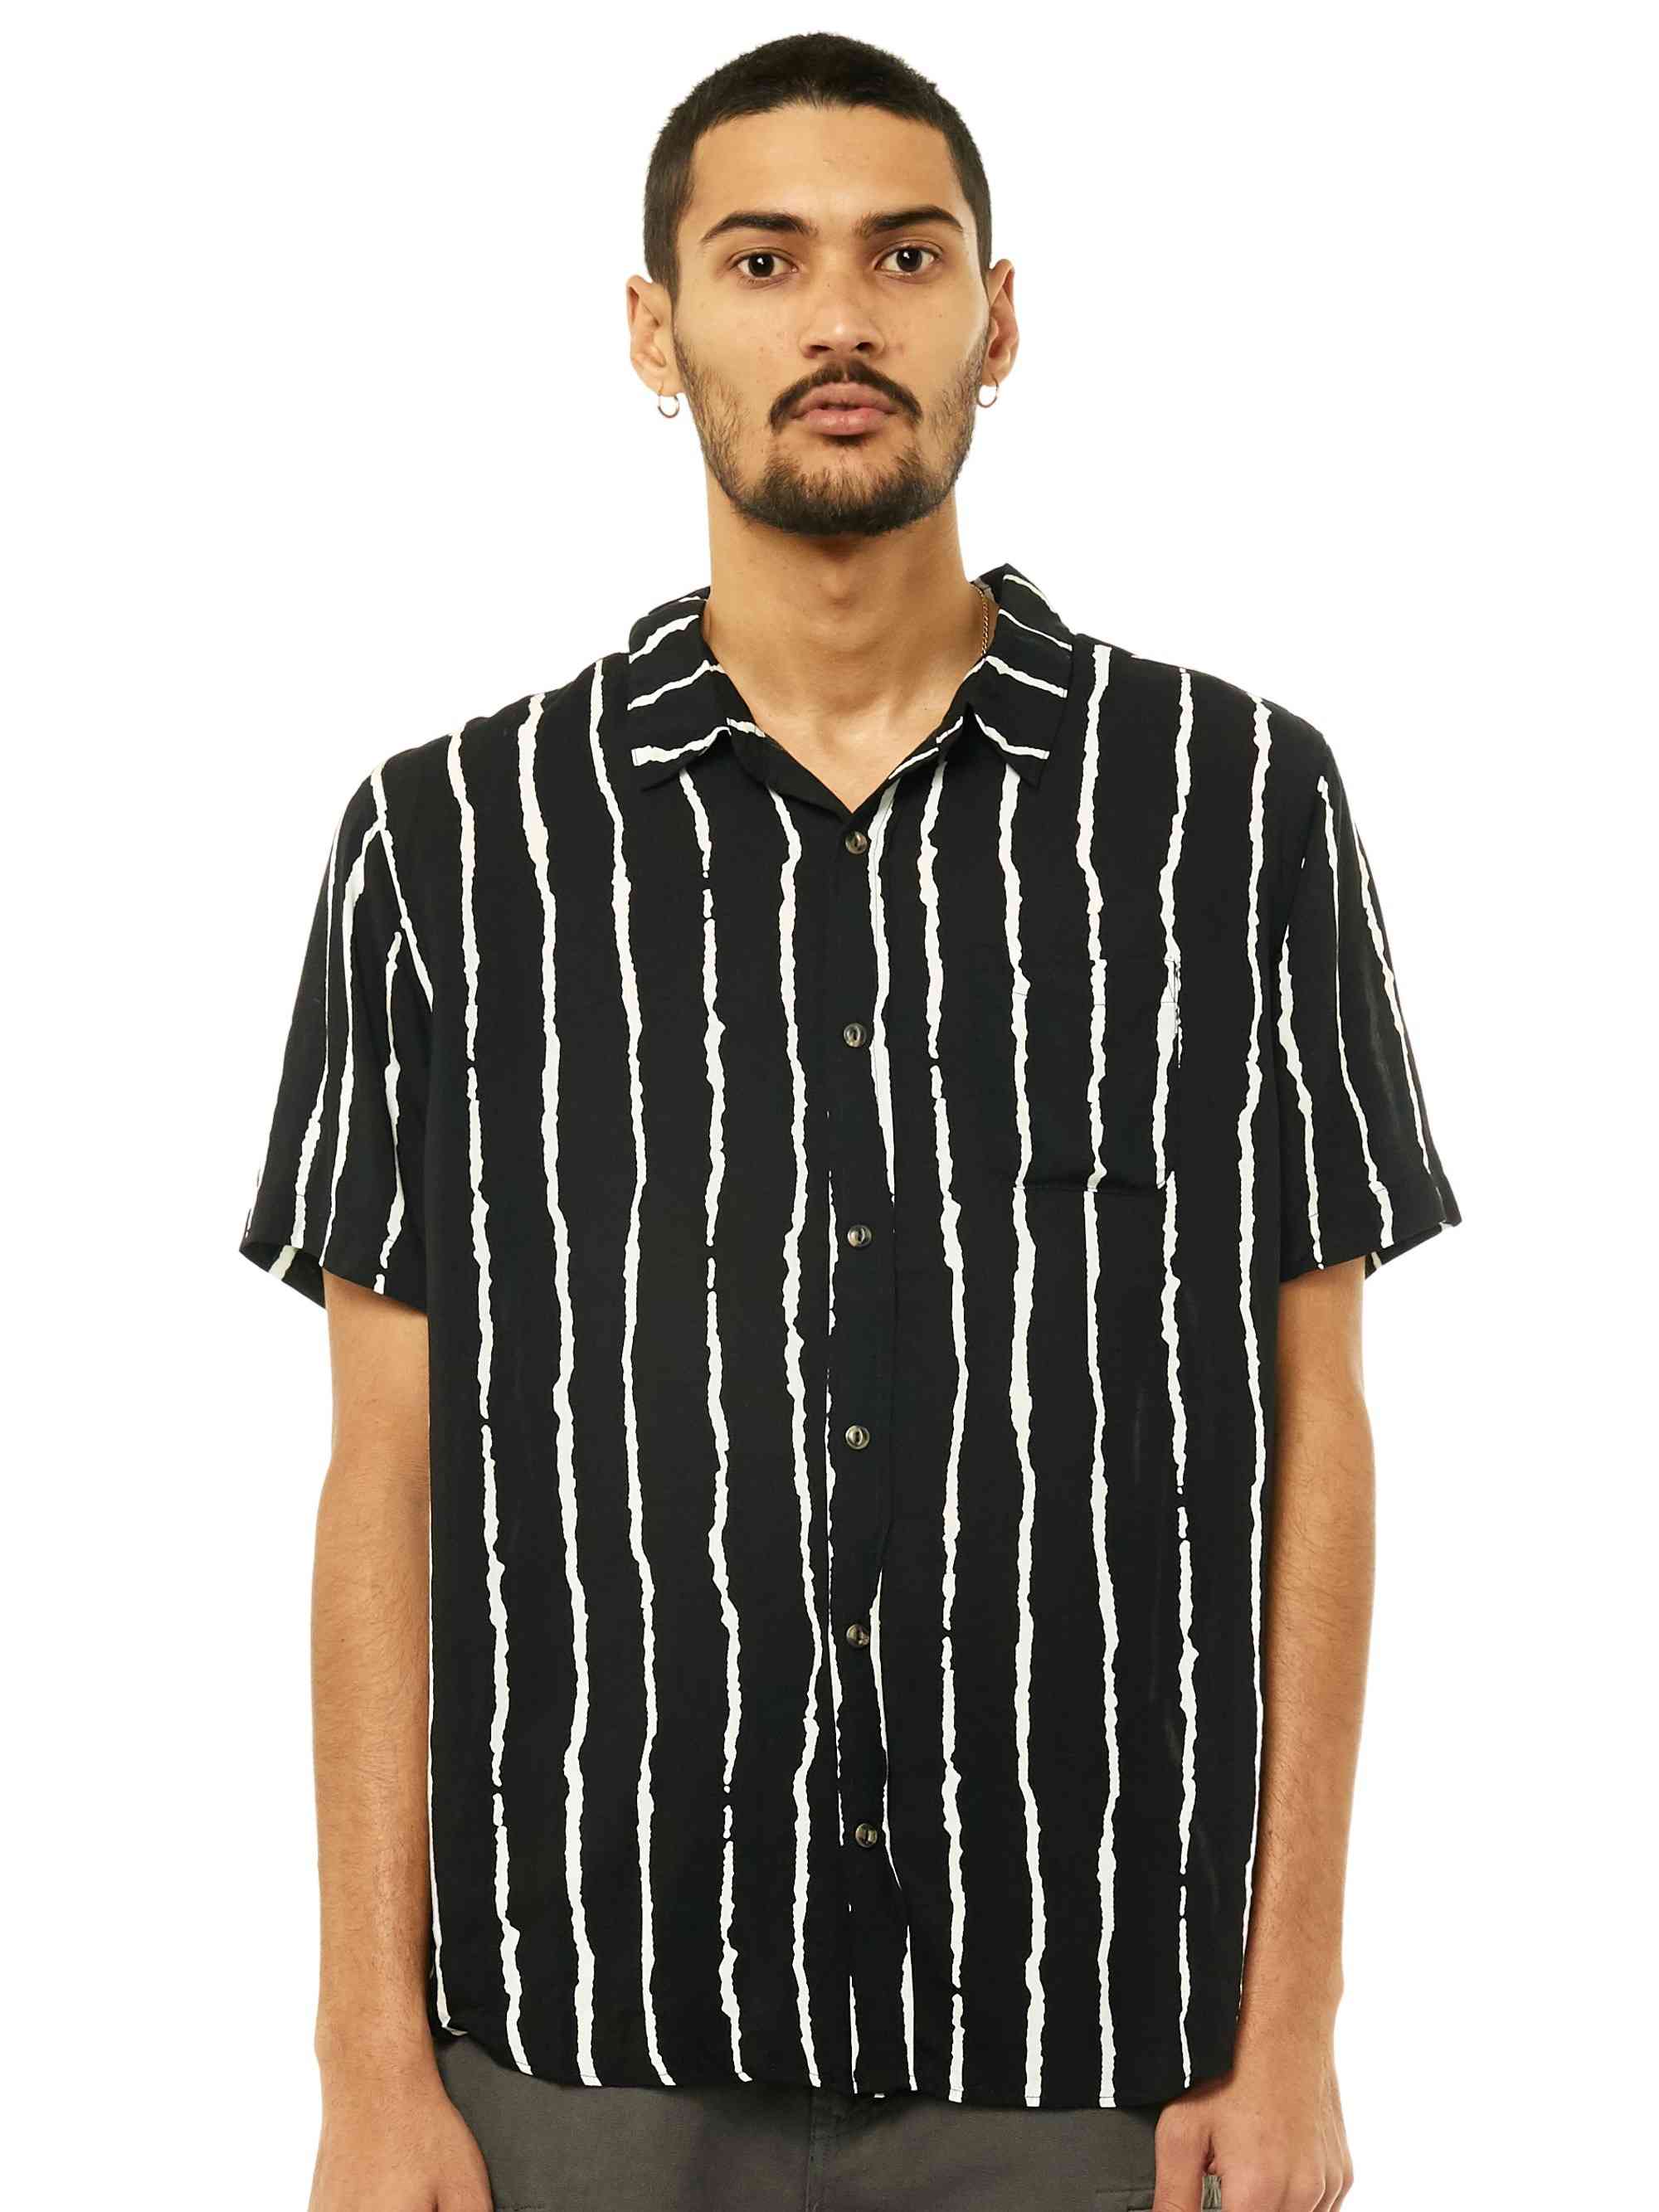 Rusty Block Out Short Sleeve Shirt - Black Rusty Australia, XL / Black